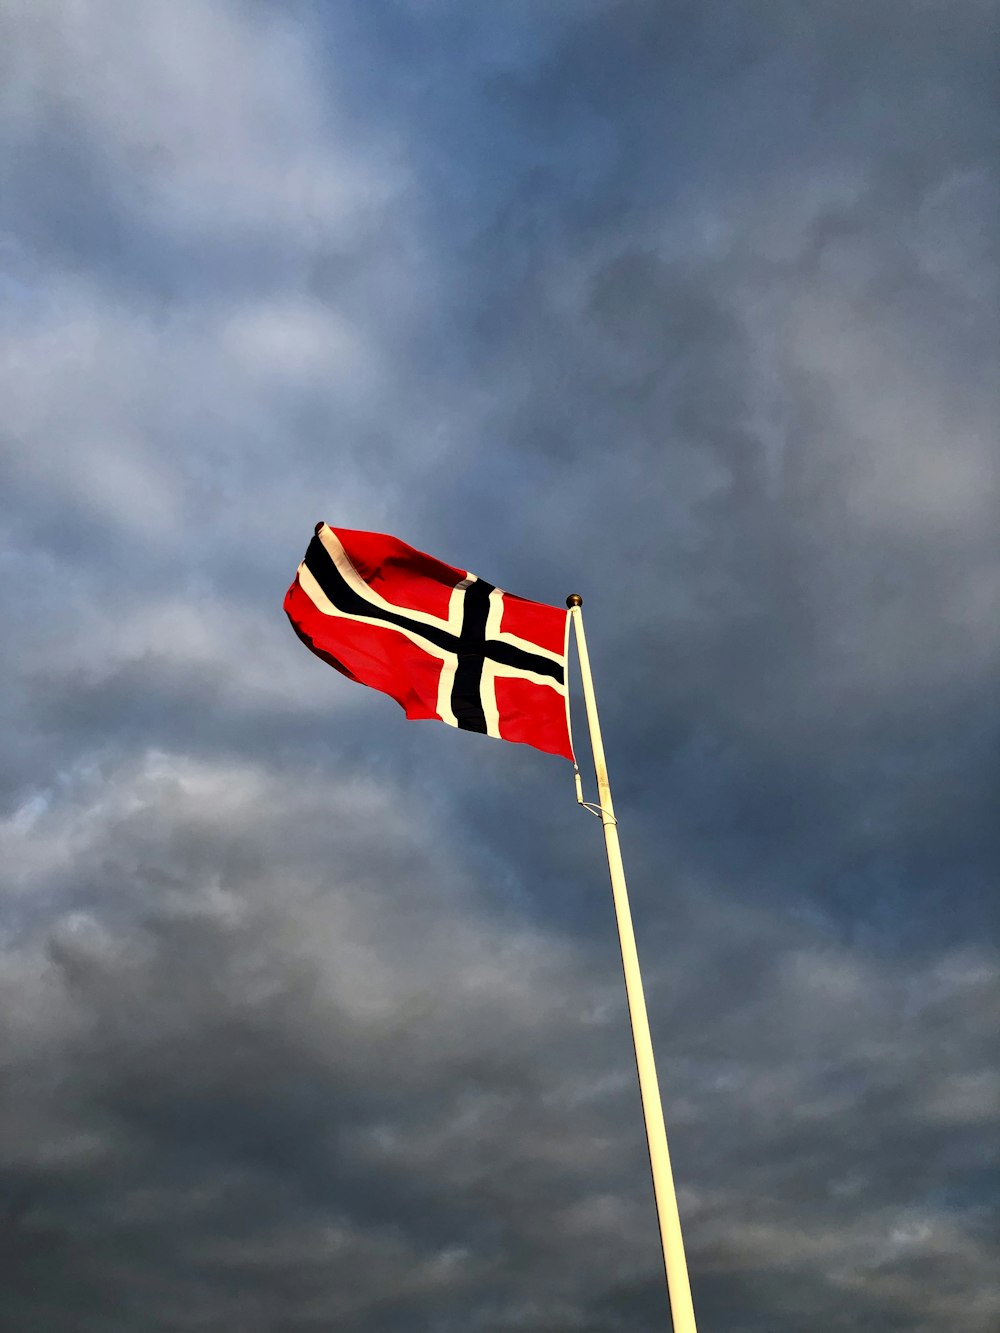 Red and black flag photo – Free Lomma Image on Unsplash